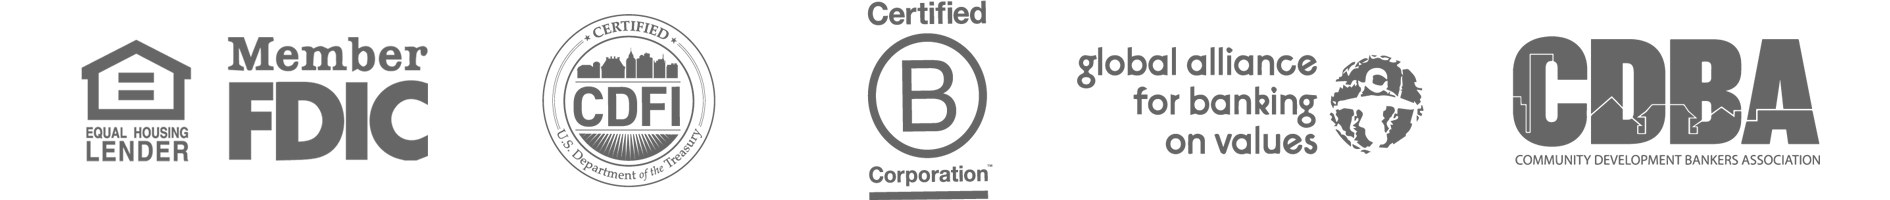 certification and designation logos